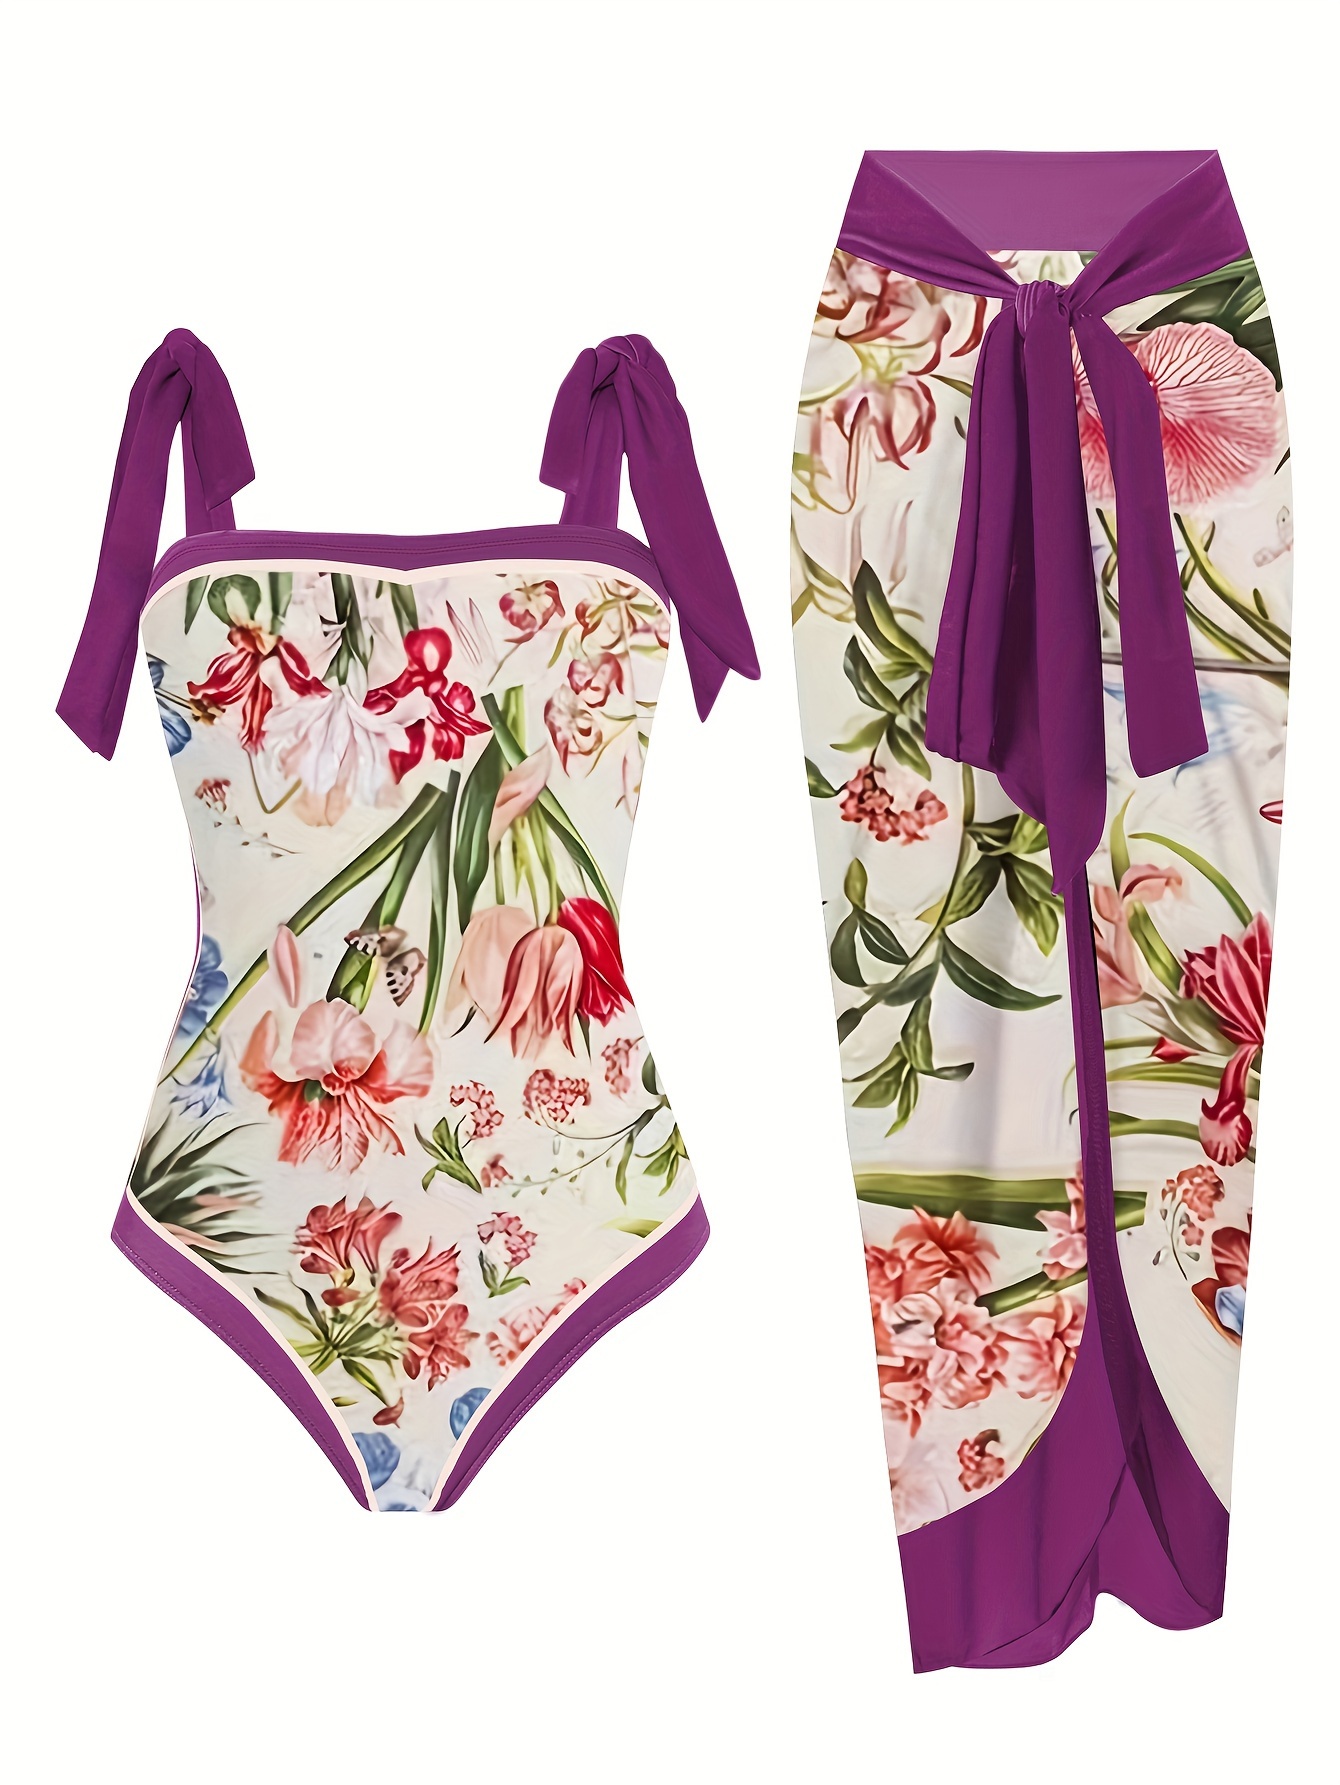 Plus Size Elegant Tankini Set, Women's Plus Retro Floral Print Tie Shoulder  * Swimsuit & Side Knot Skirt Tankini Two Piece Set